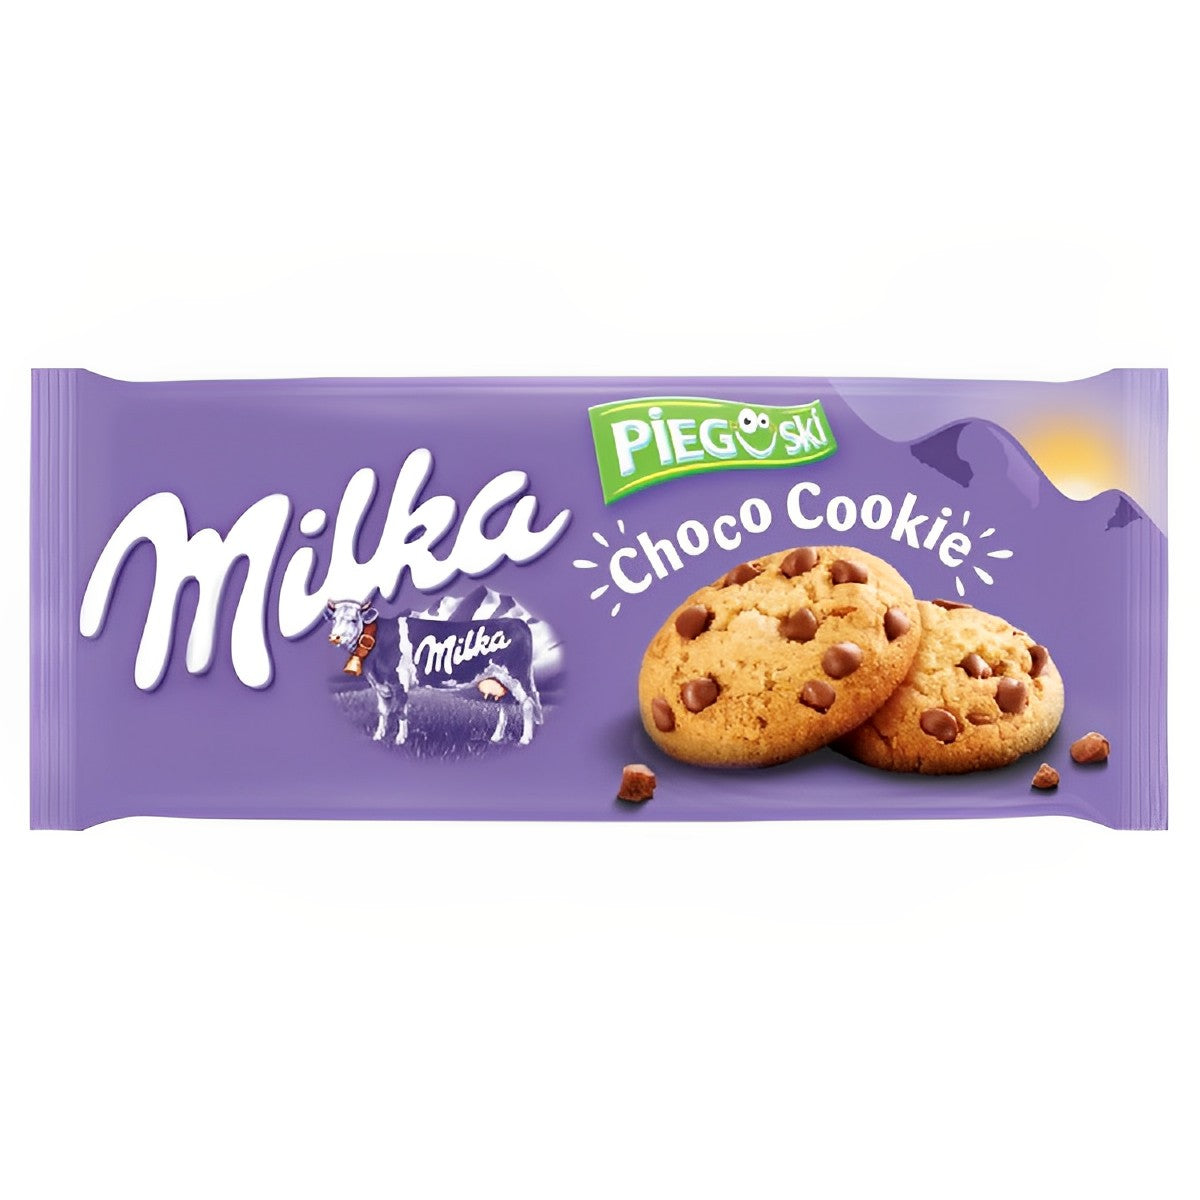 Milka - Pieguski Chocolate Drops Cookies - 135g - Continental Food Store